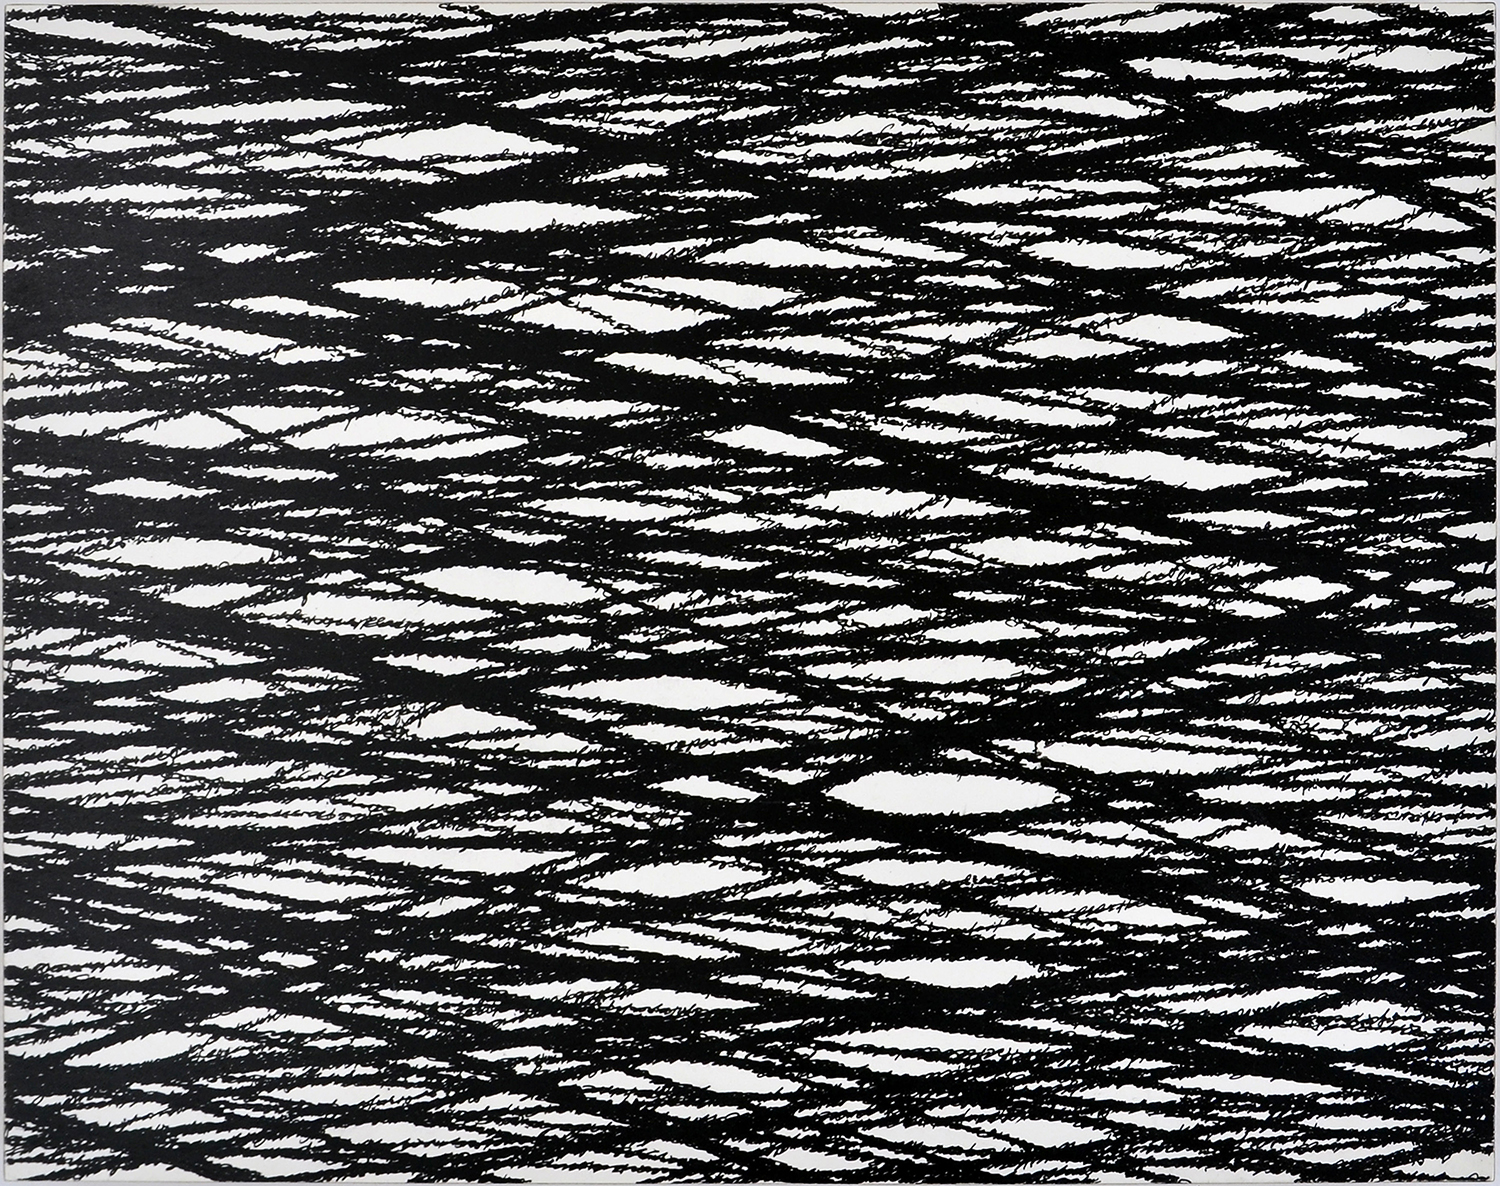  JG/AG (Genet/Giacometti); Ink on Clayboard Panel; 11" x 14"; 2001 